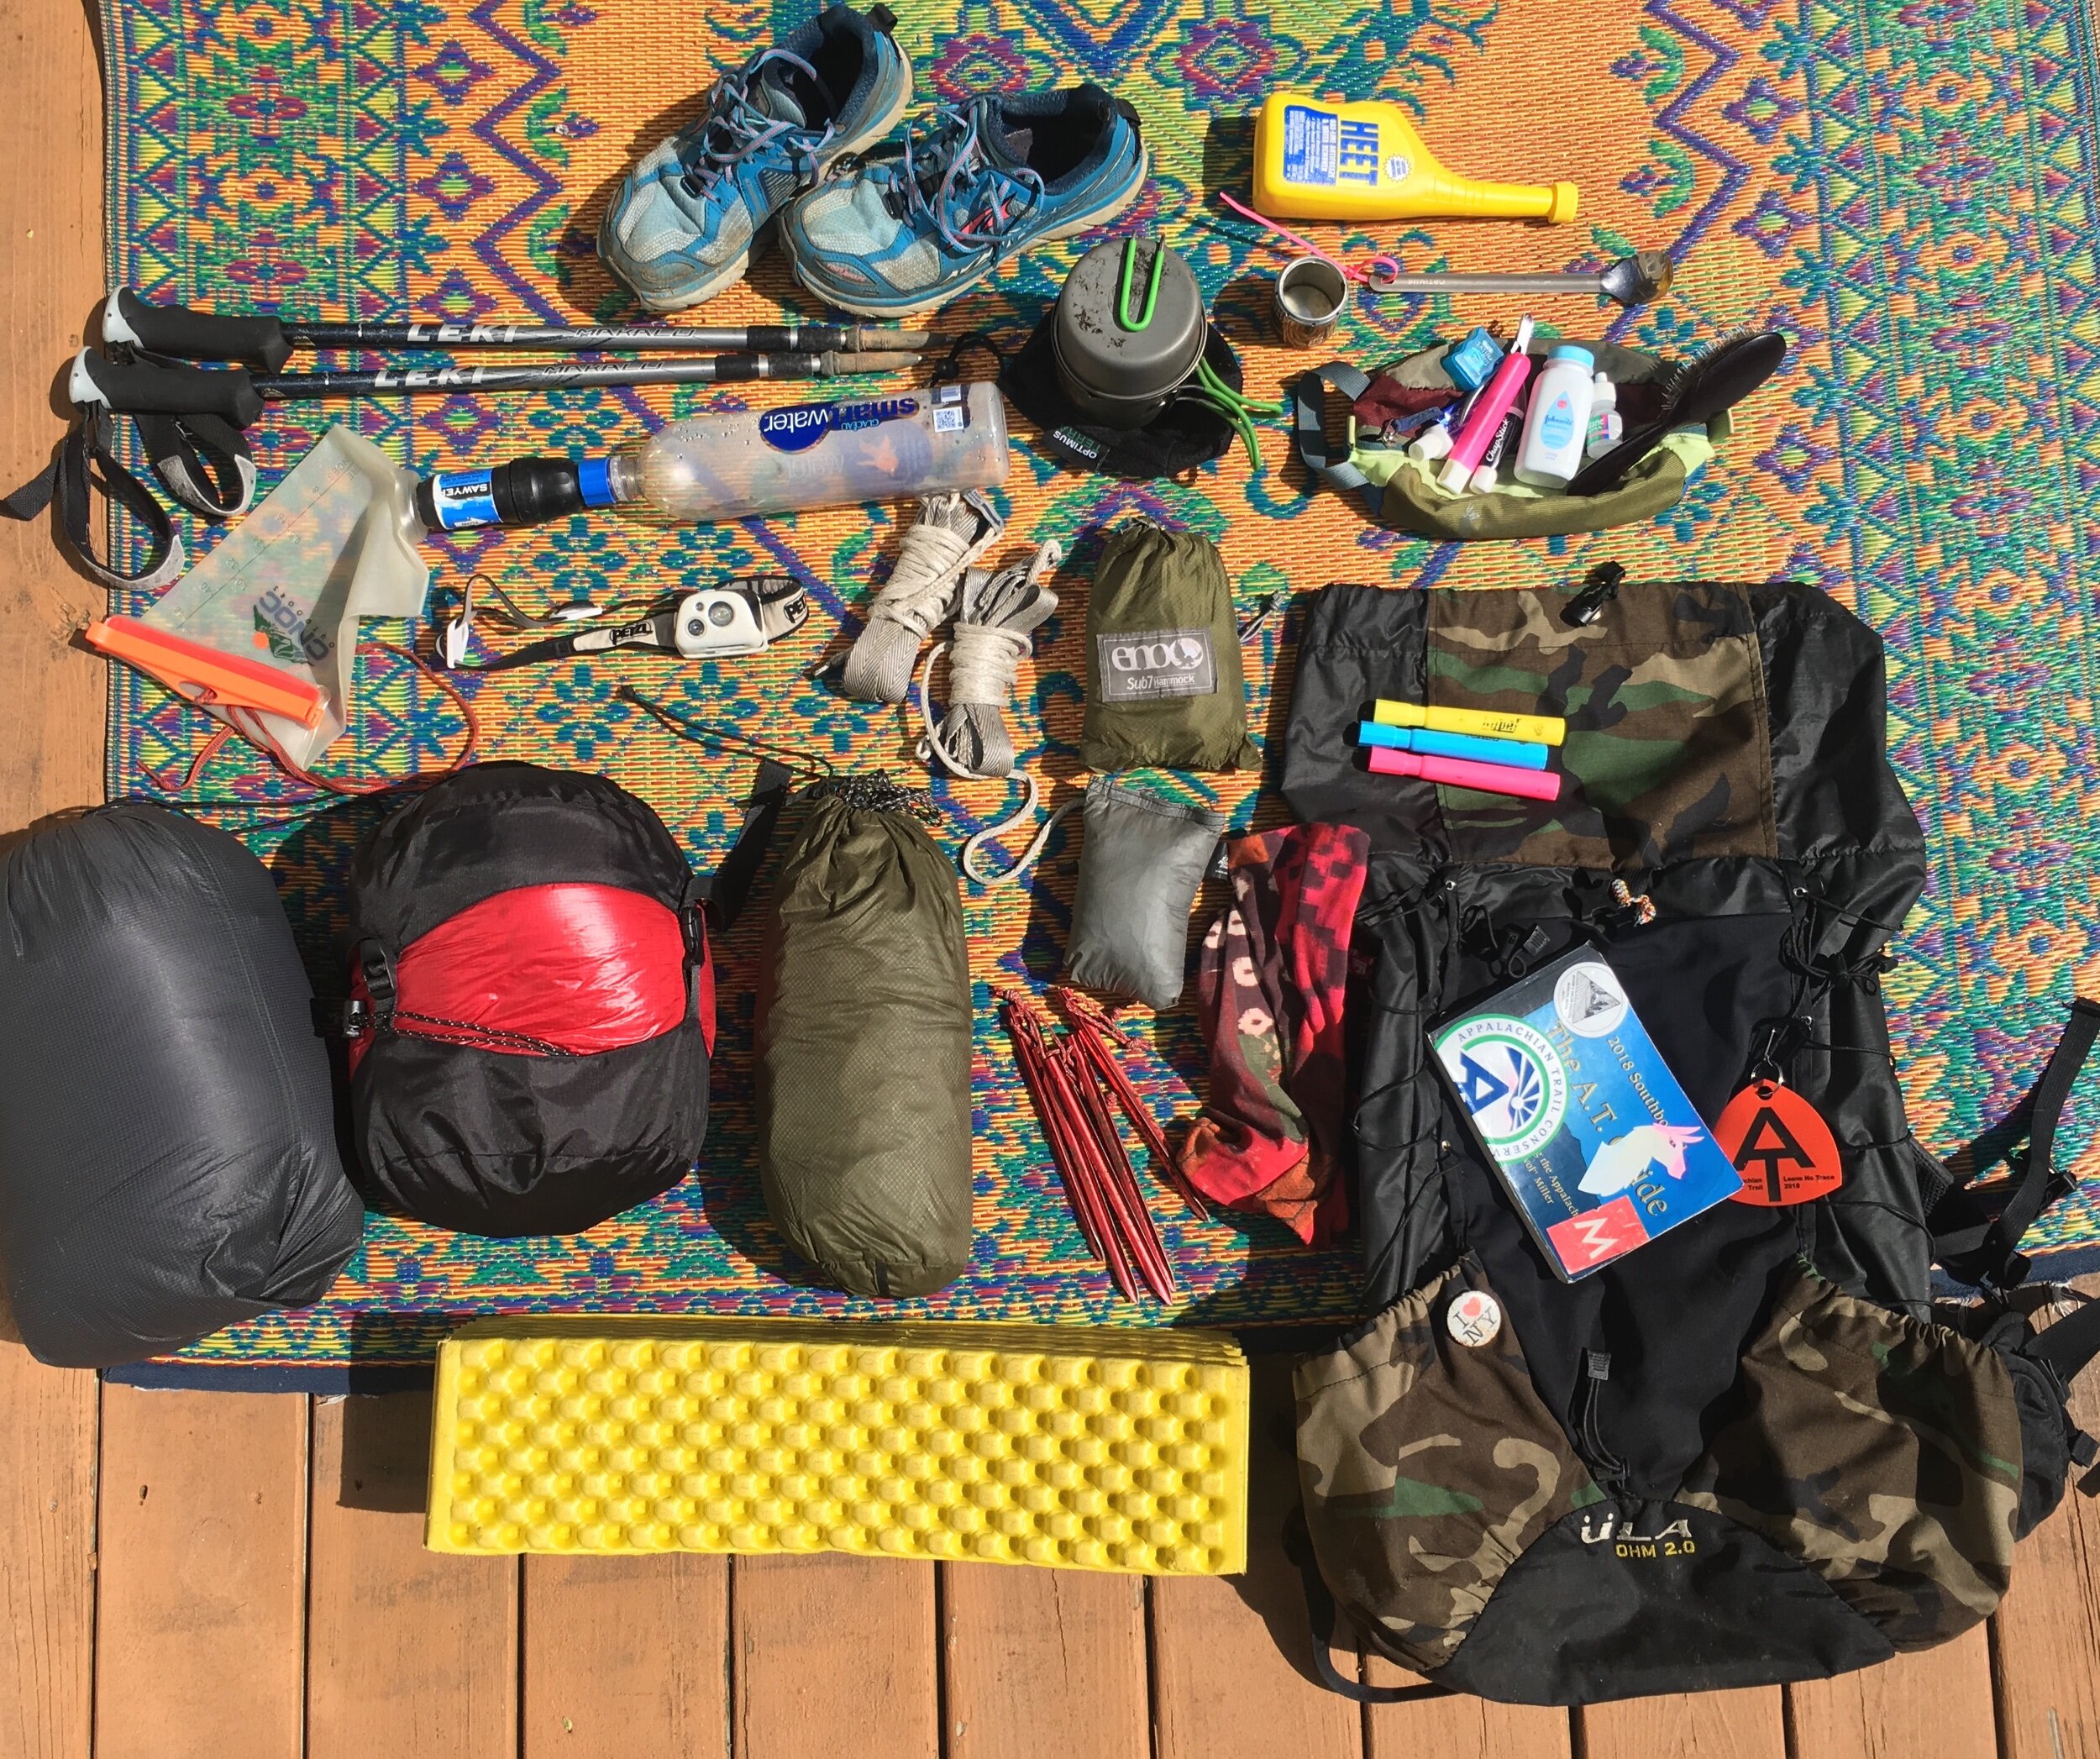 Appalachian Trail Hiking Clothing: 5 Essential Items